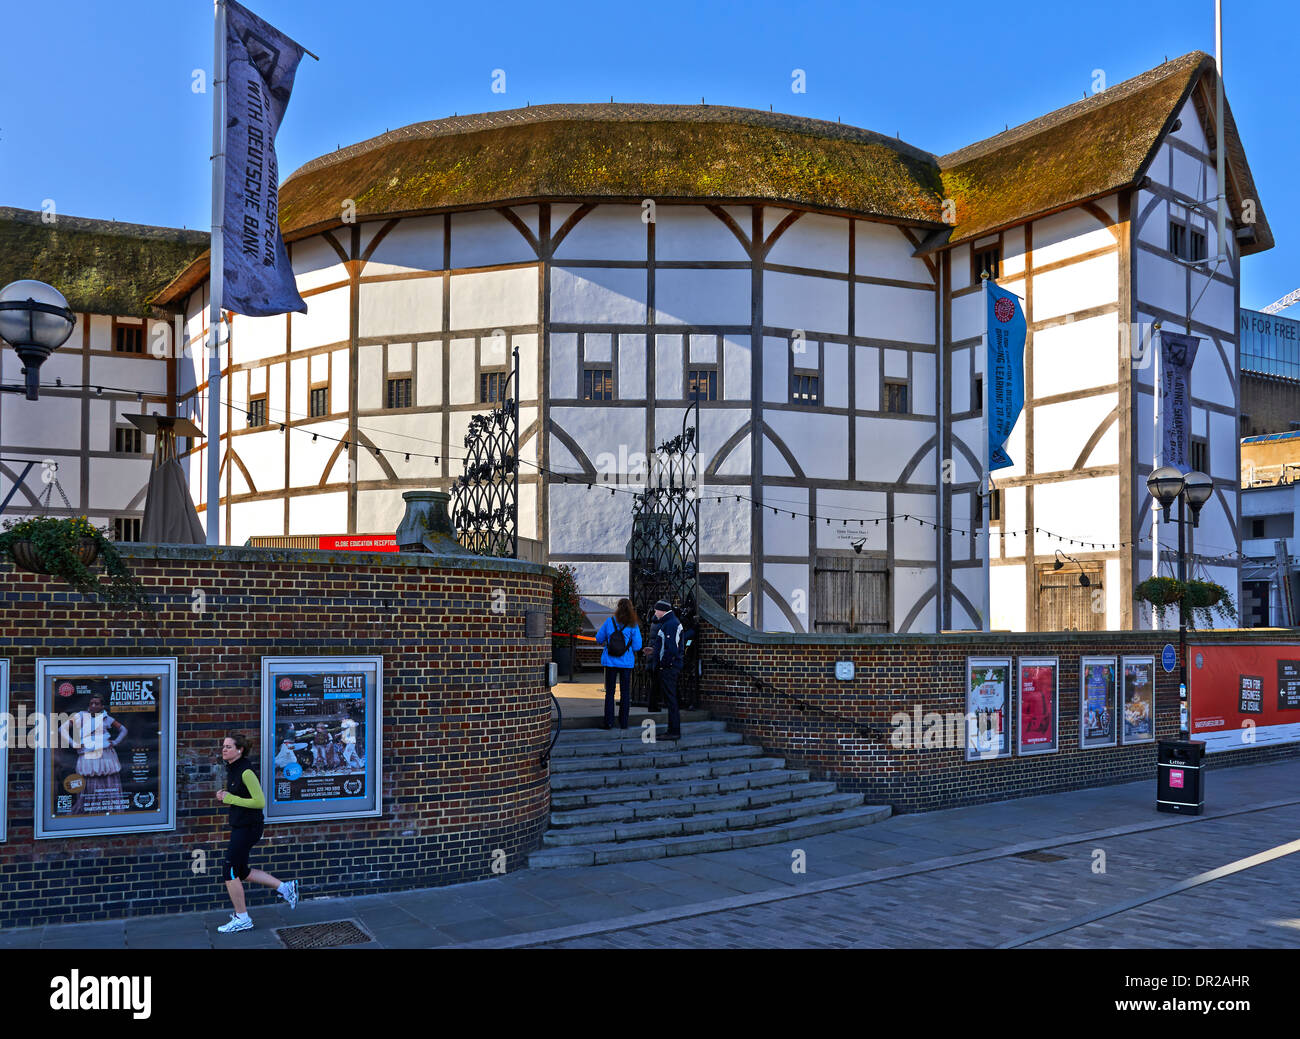 william shakespeare globe theatre london